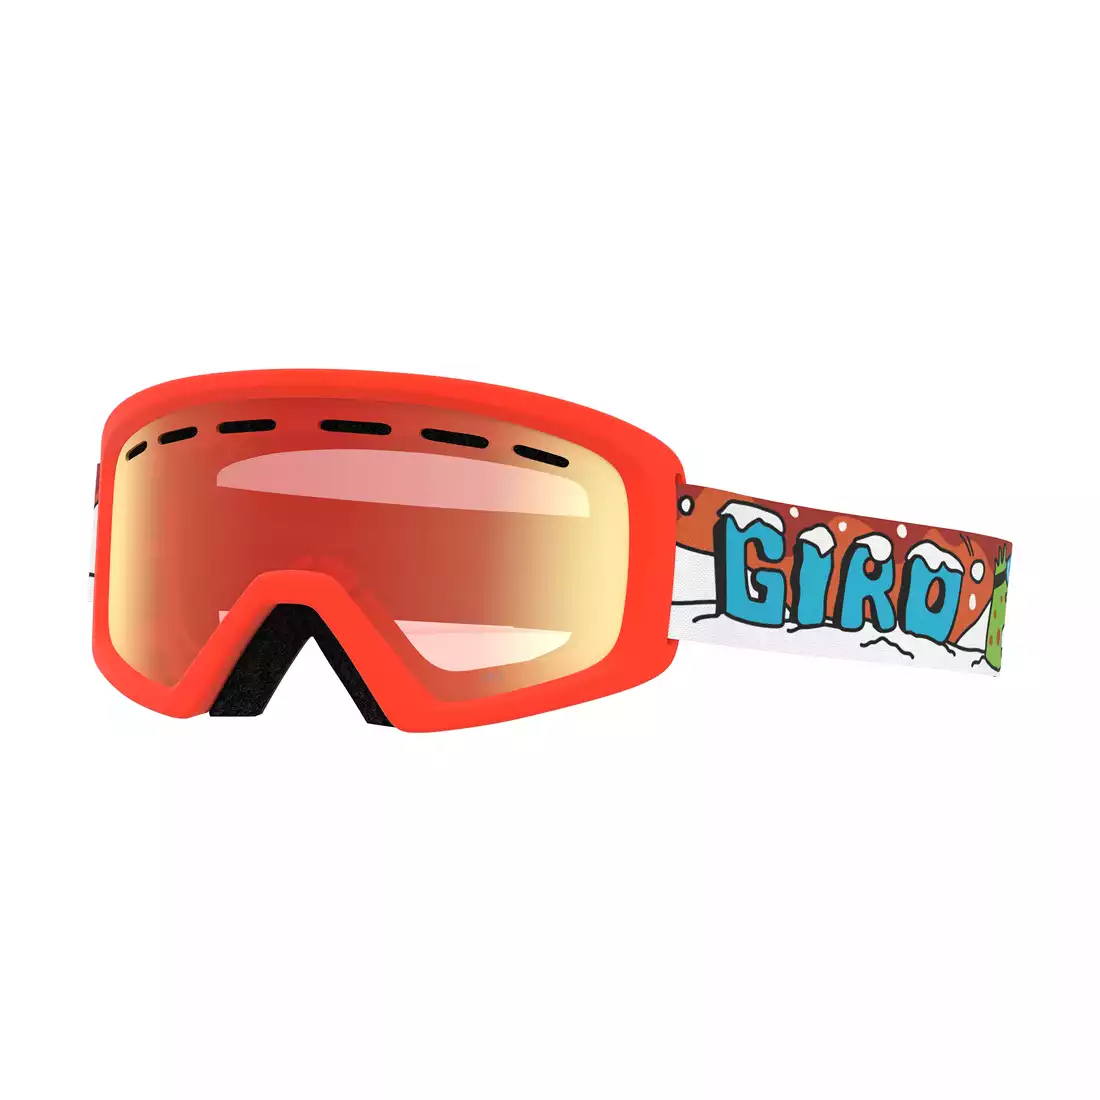 Juniorskie gogle narciarskie / snowboardowe REV DINOSNOW GR-7105715